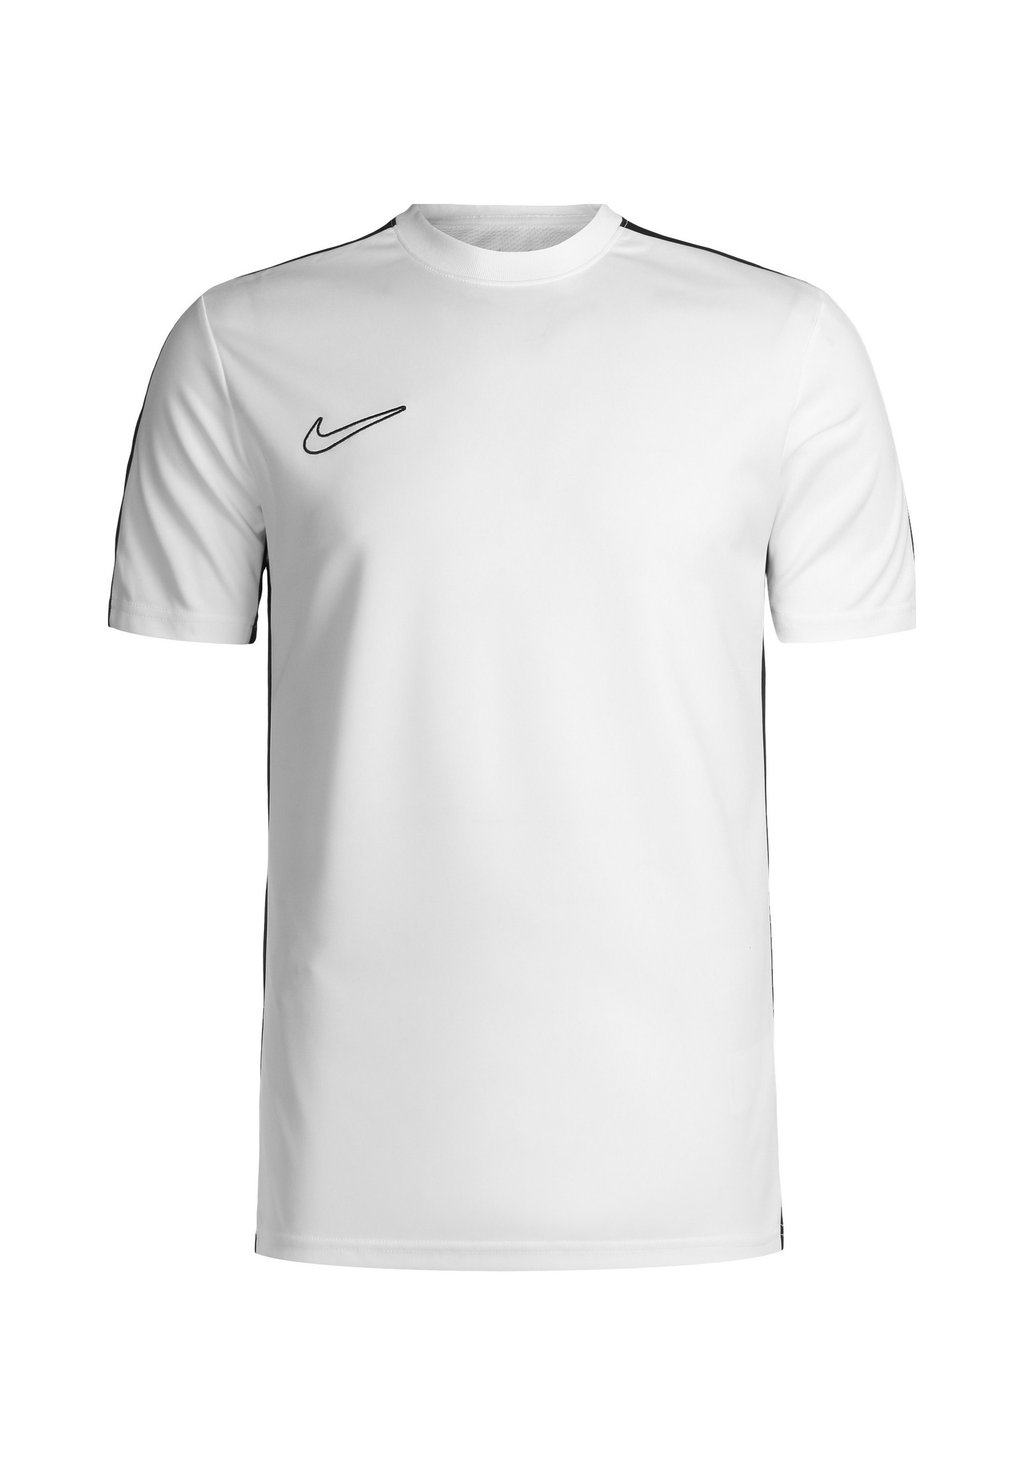 Спортивная футболка DRI-FIT ACADEMY 23 Nike, цвет weissschwarz футболка базовая teamsport nike цвет weissschwarz